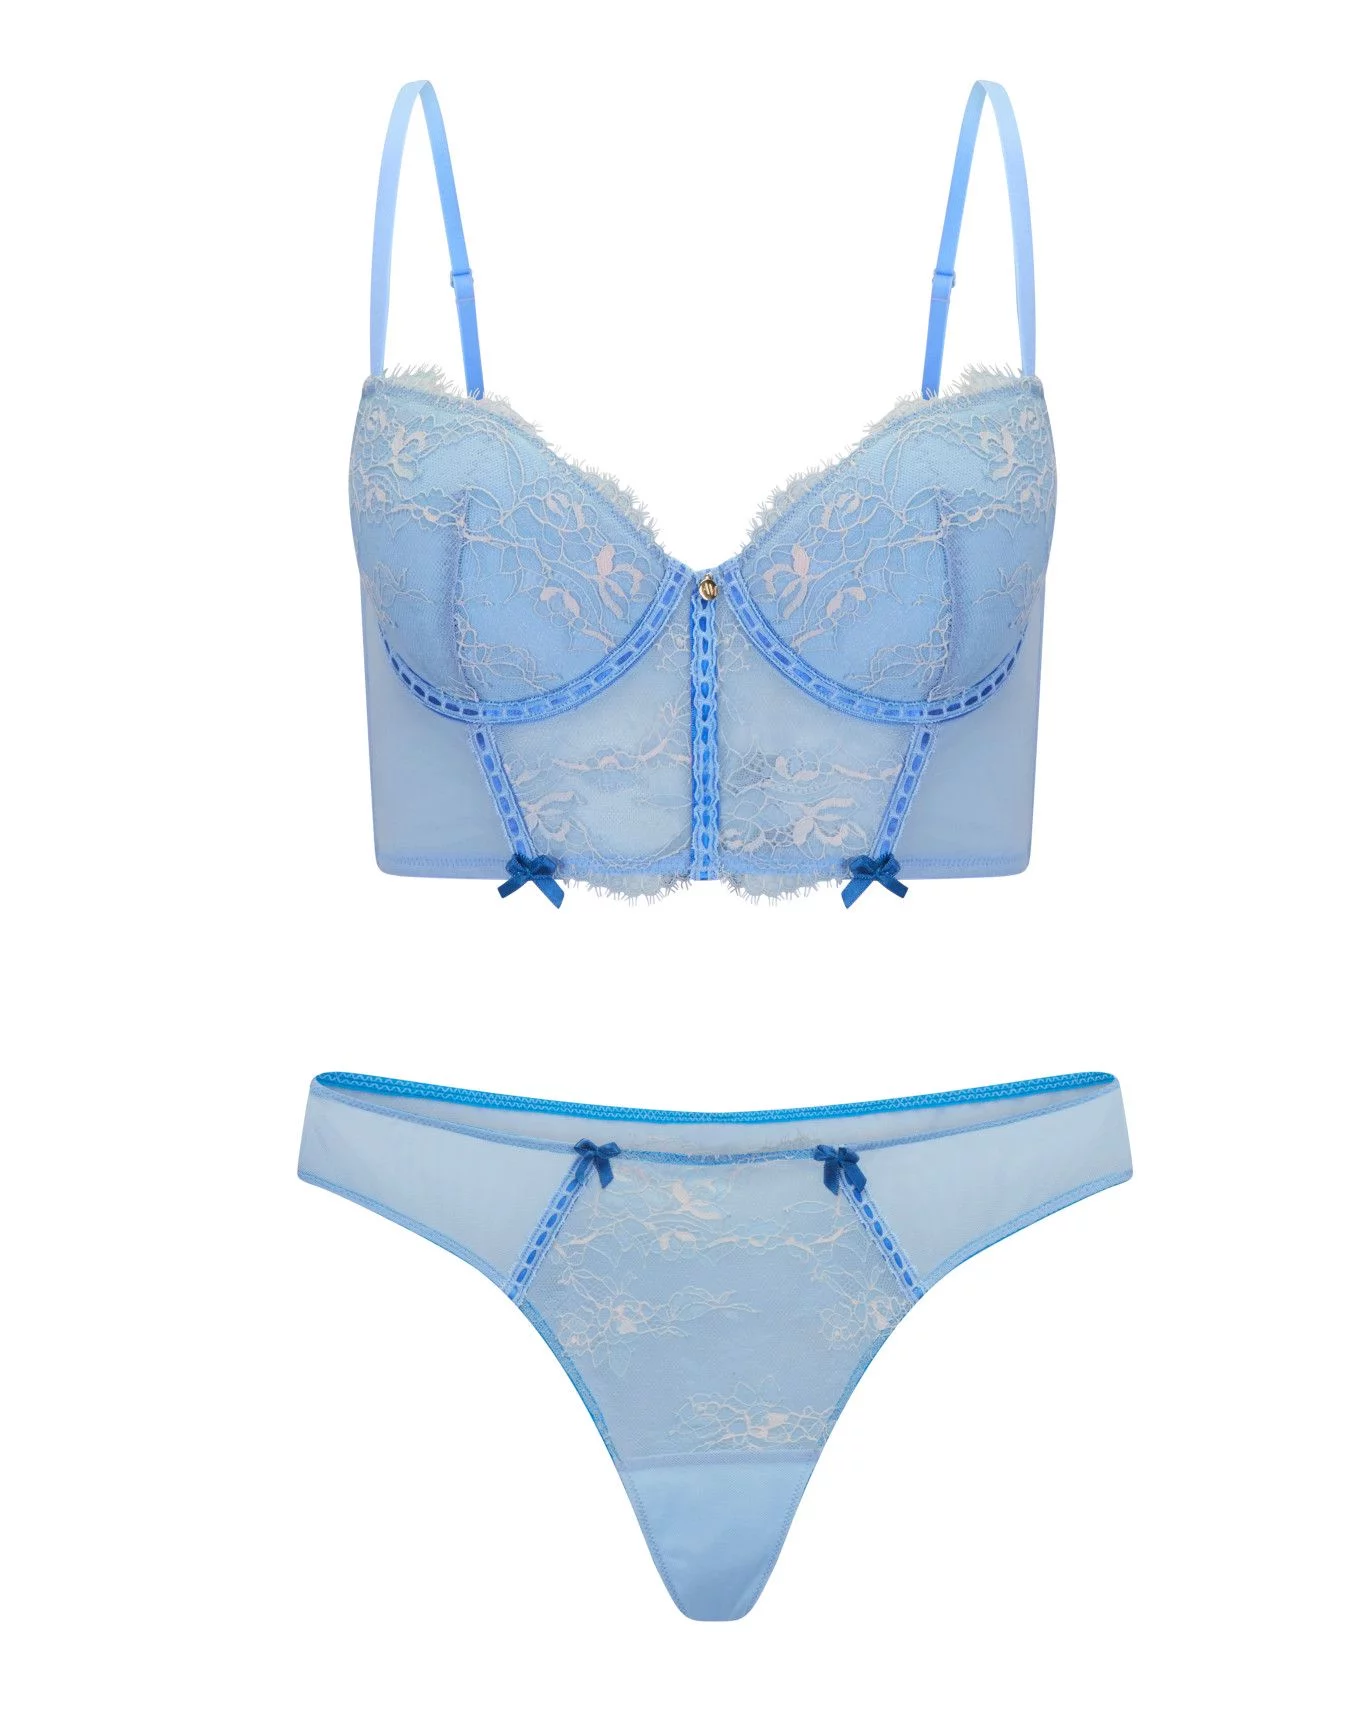 Bodycare Bridal Blue Bra Panty Printed Lingerie Set - 6425-blue, 6425-blue